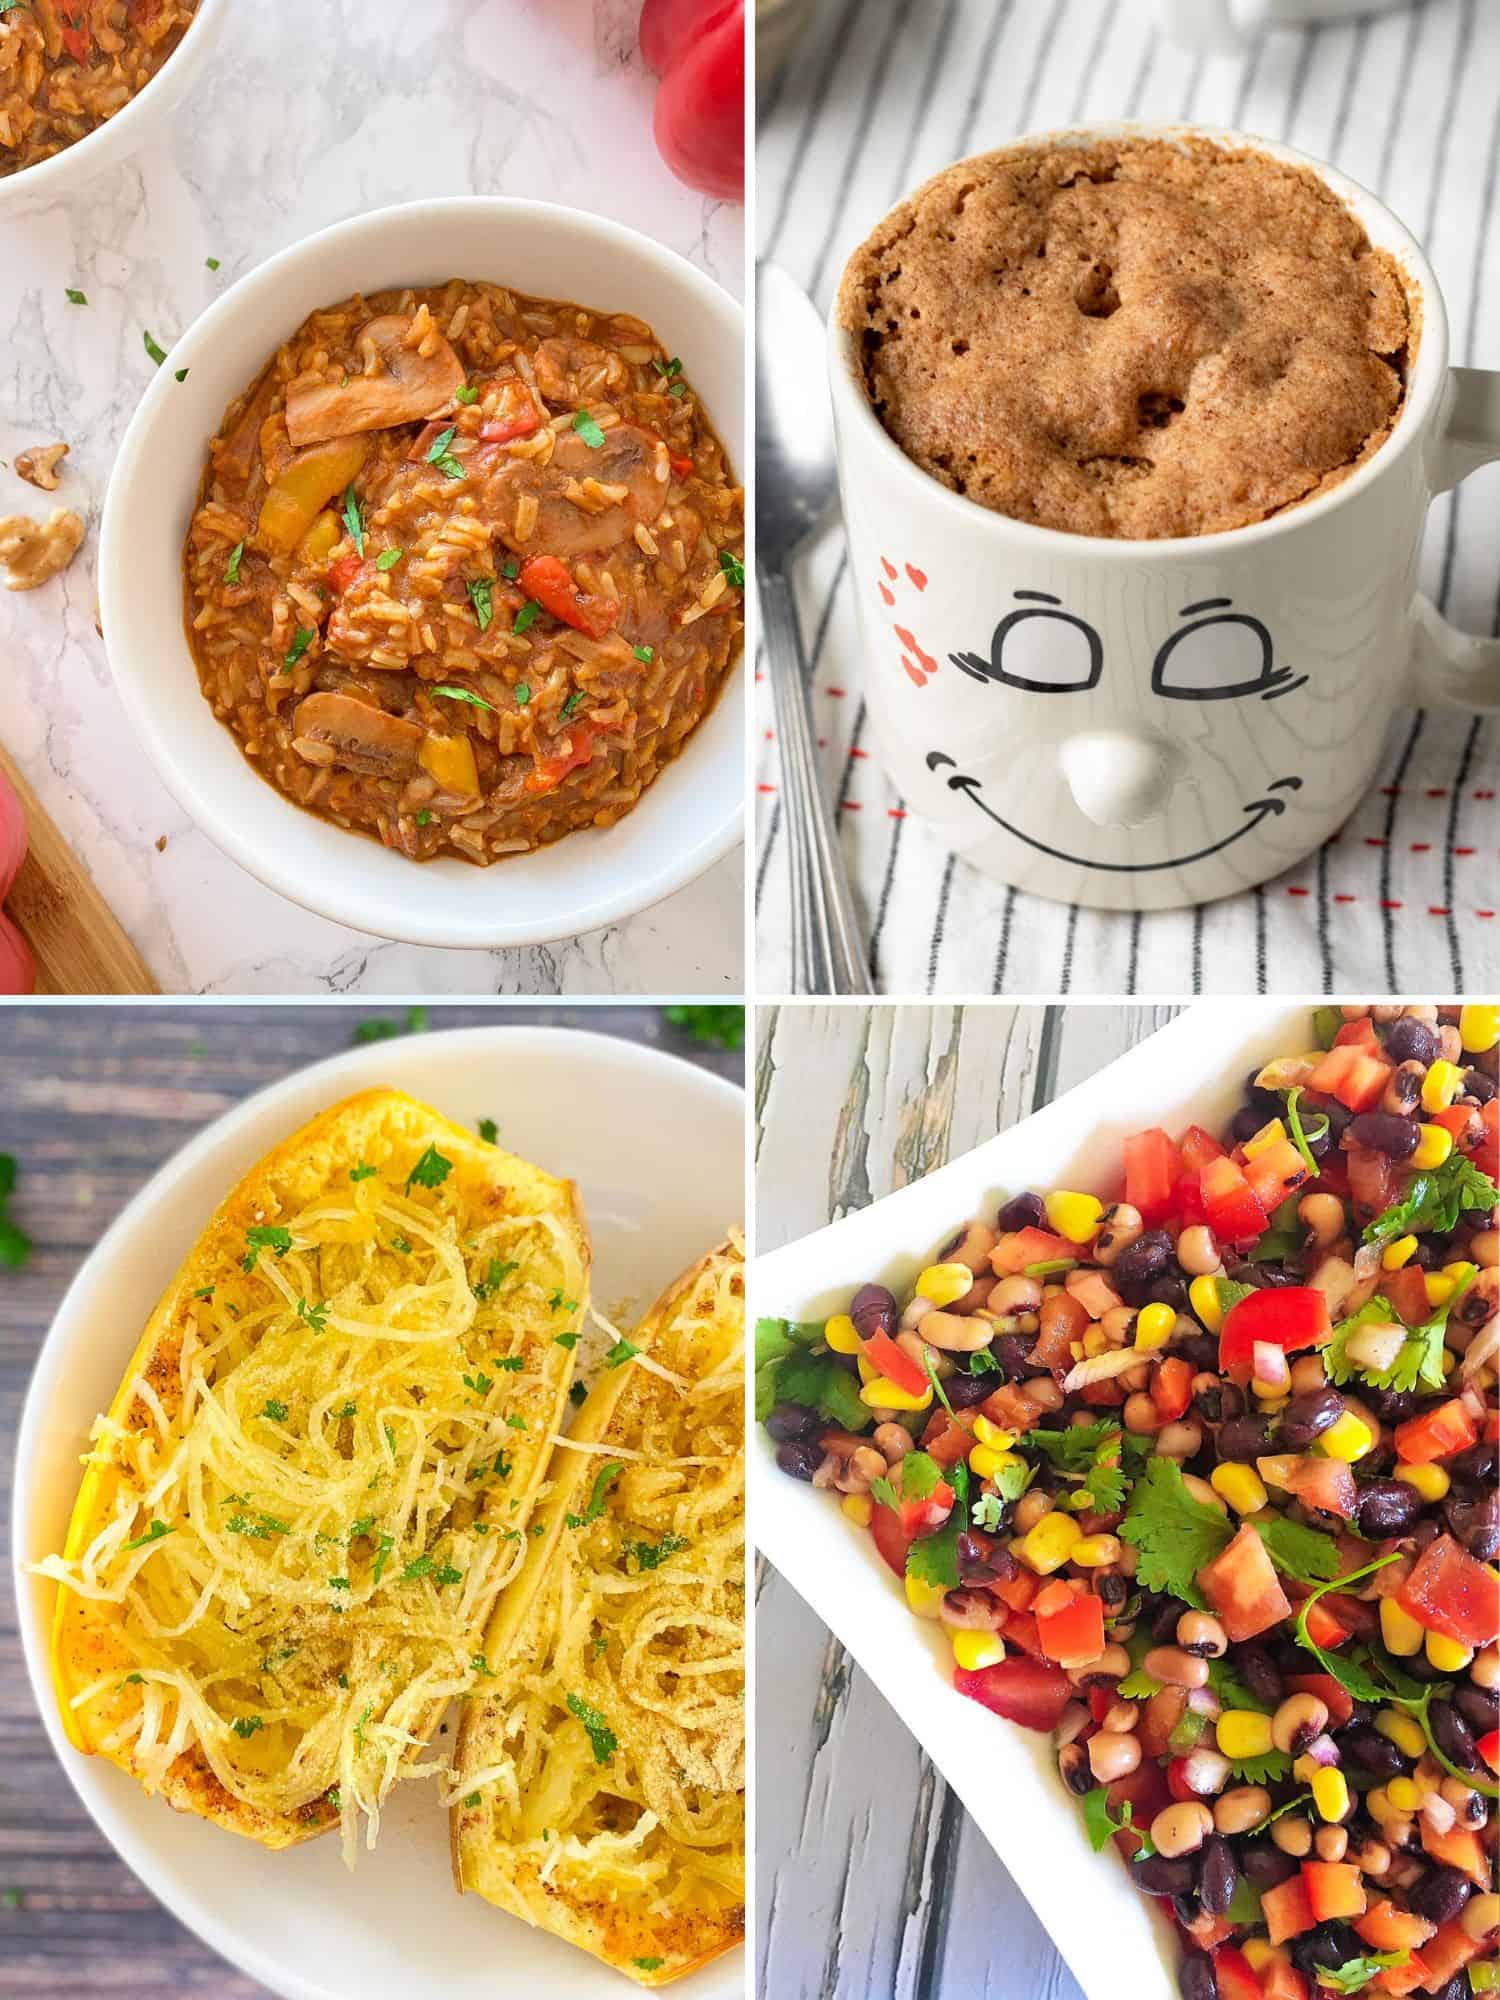 Collage of images: rice, mug cake, spaghetti squash, and salad.